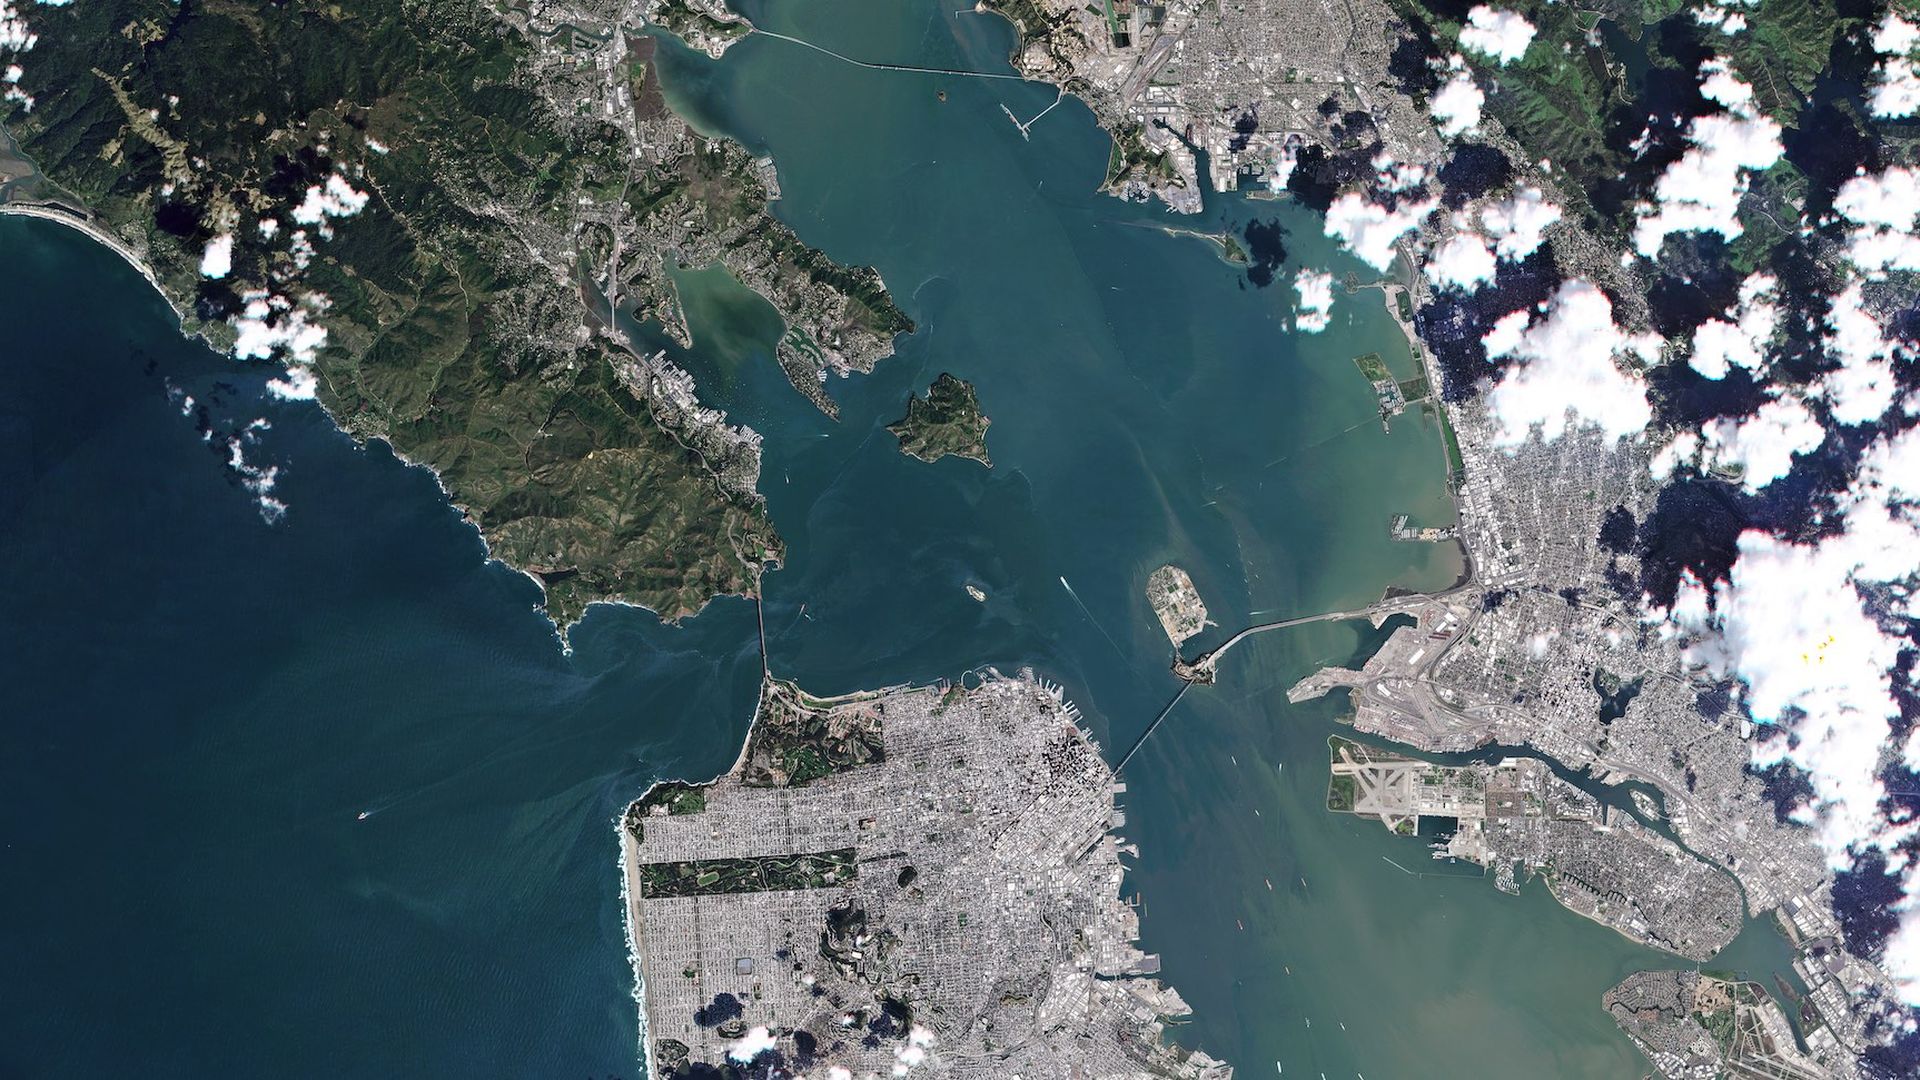 San Francisco as seen from orbit